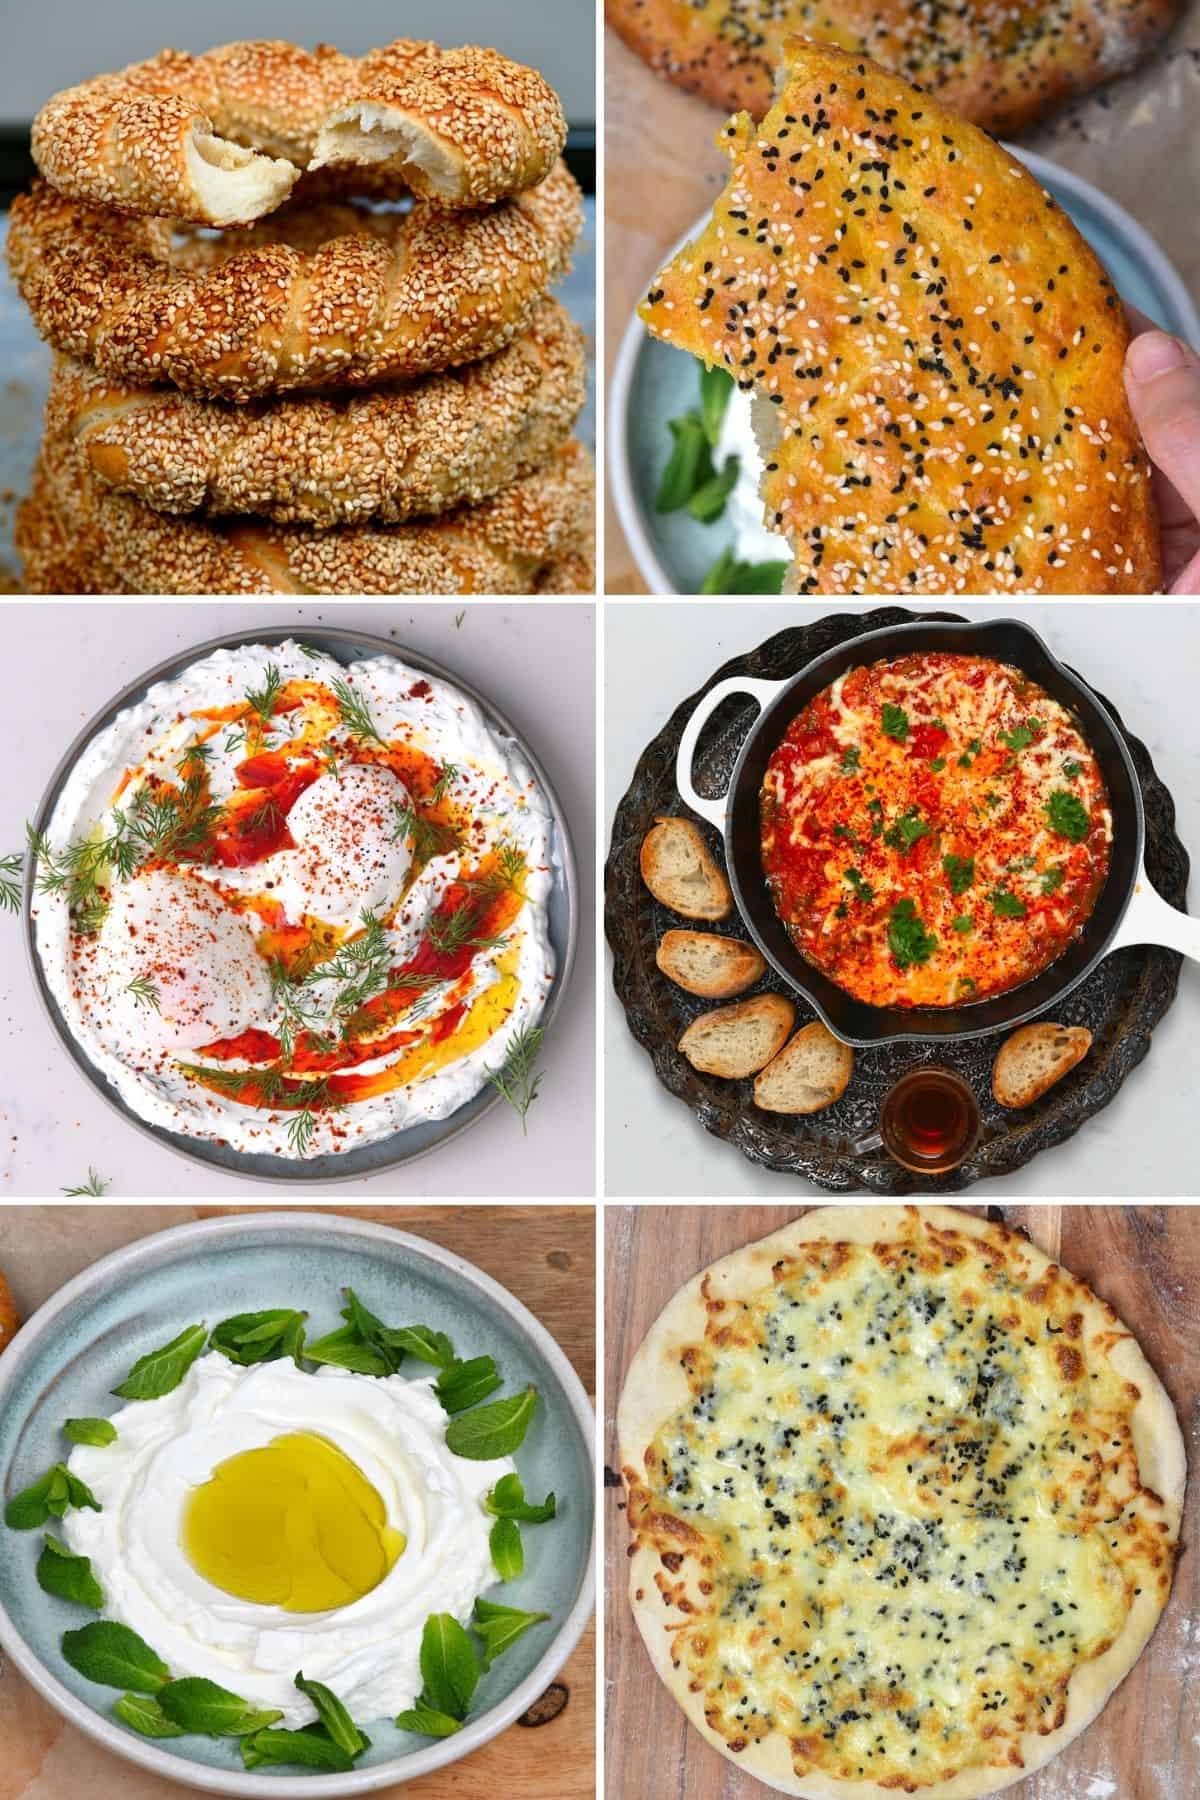 Six West Asia breakfast ideas - simit, pide bread, turkish eggs, menemen, labneh, manakish.